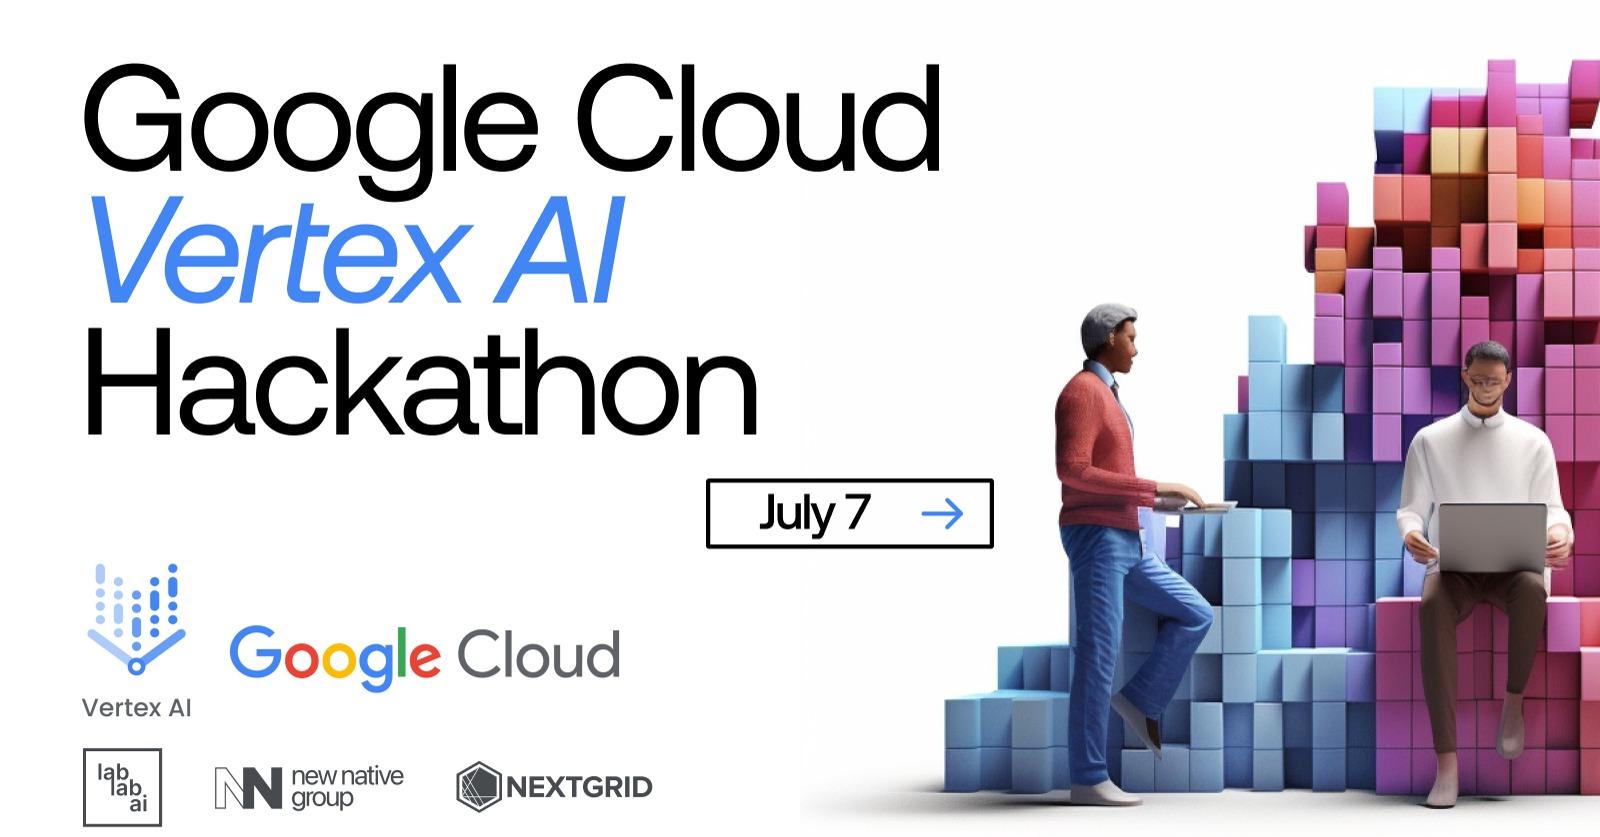 Google Vertex AI Hackathon image